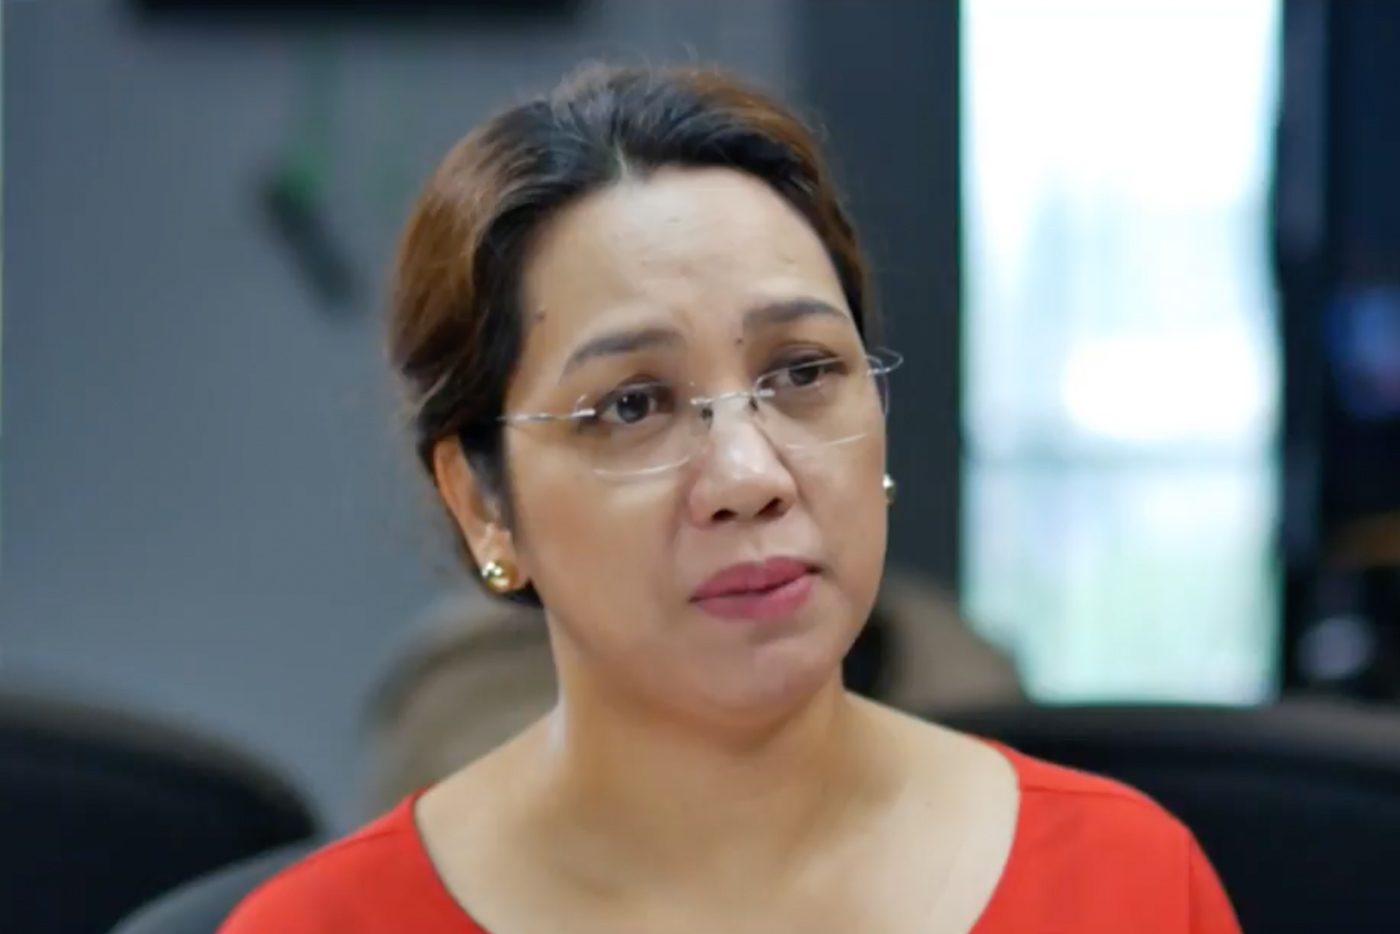 Like Aquino, Garin denies knowing Sanofi’s spotty record